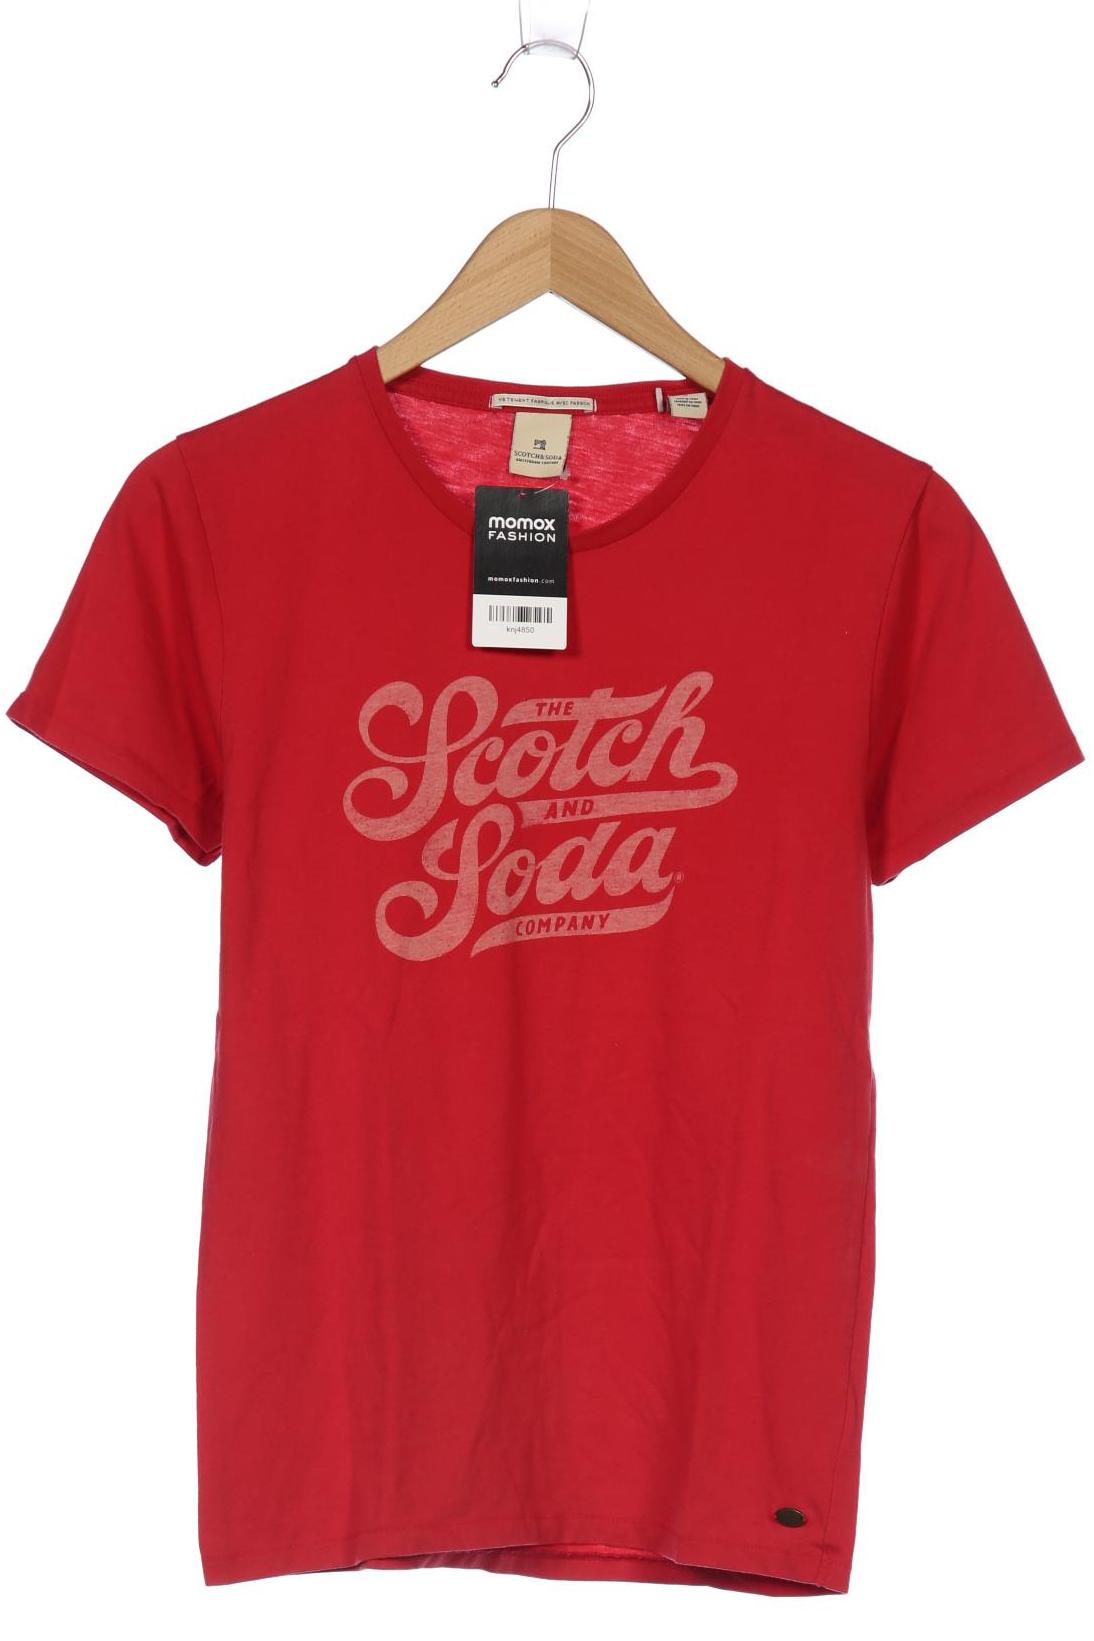 Scotch & Soda Herren T-Shirt, rot von Scotch & Soda